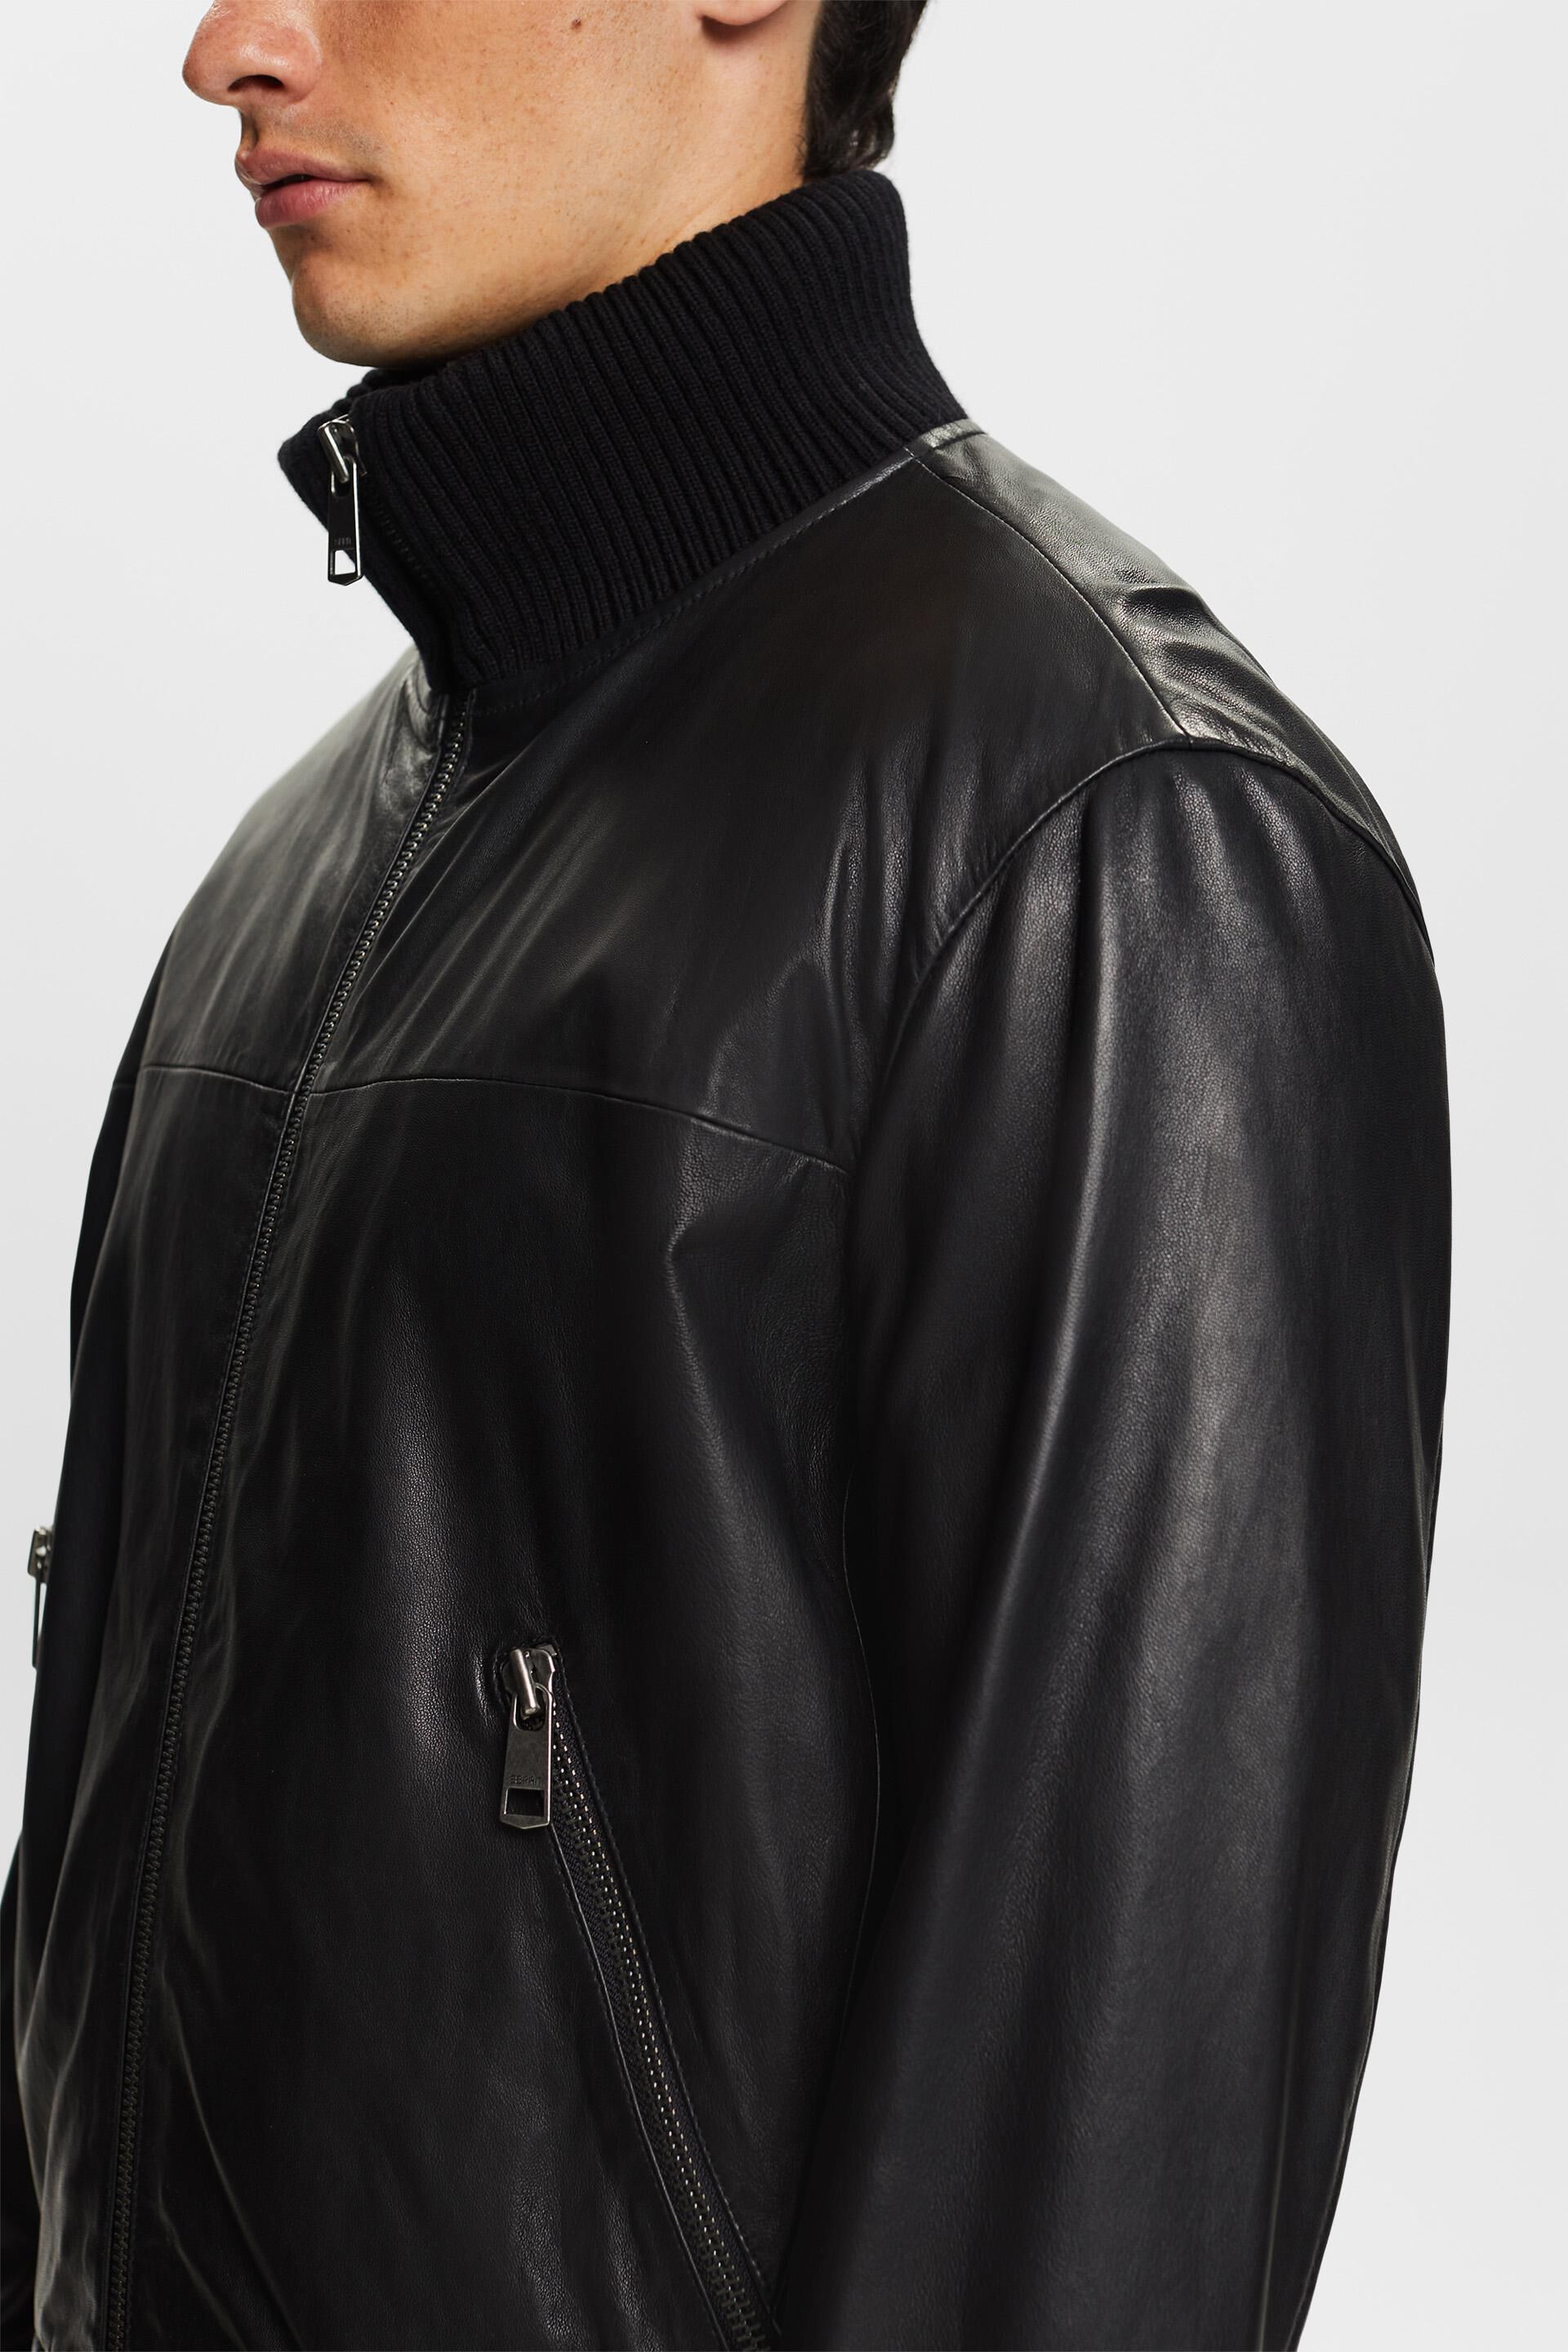 ESPRIT - Leather Bomber Jacket at our online shop